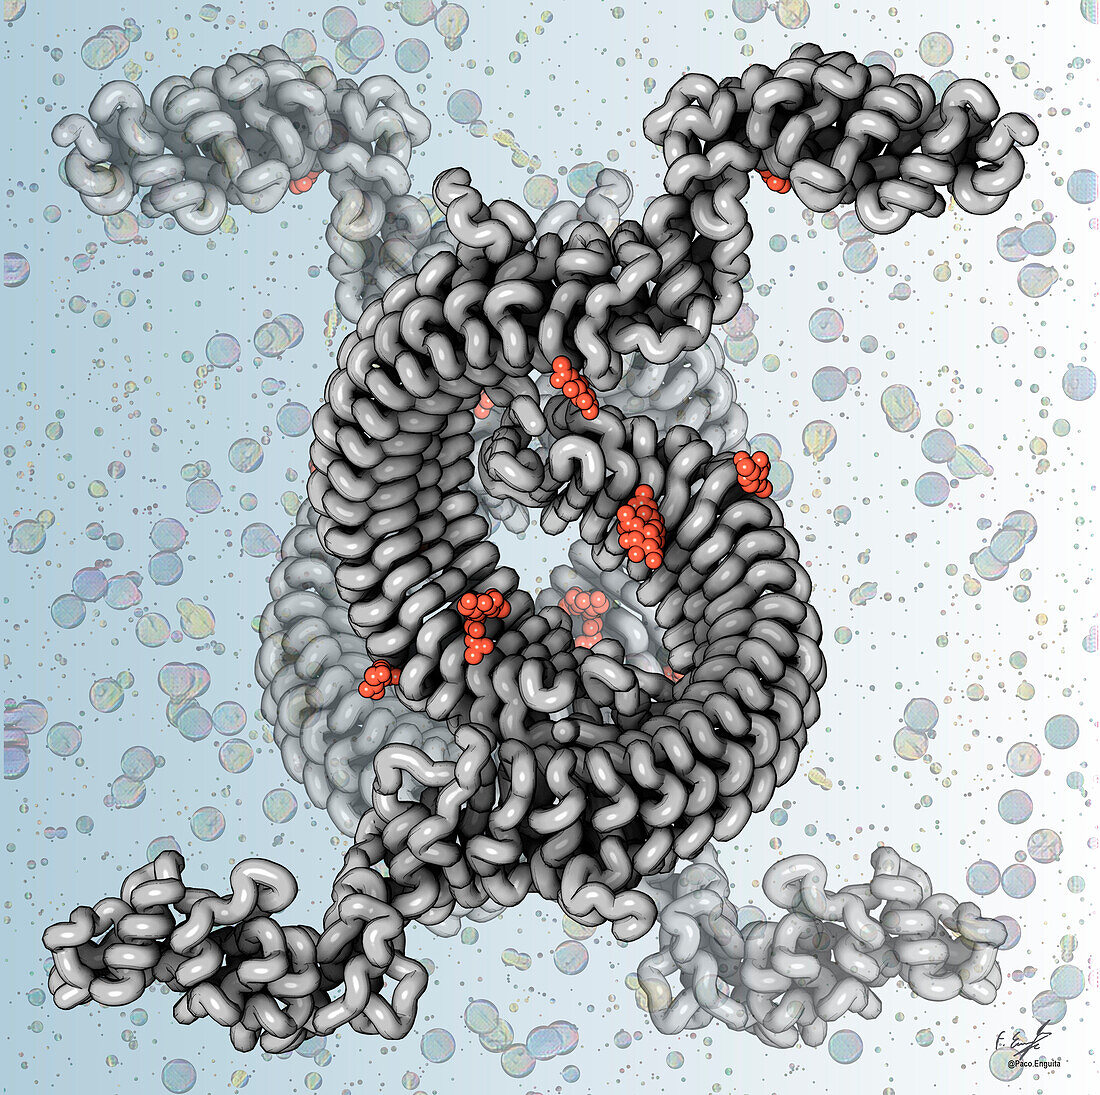 Mosquito pathogen recognition molecule, illustration